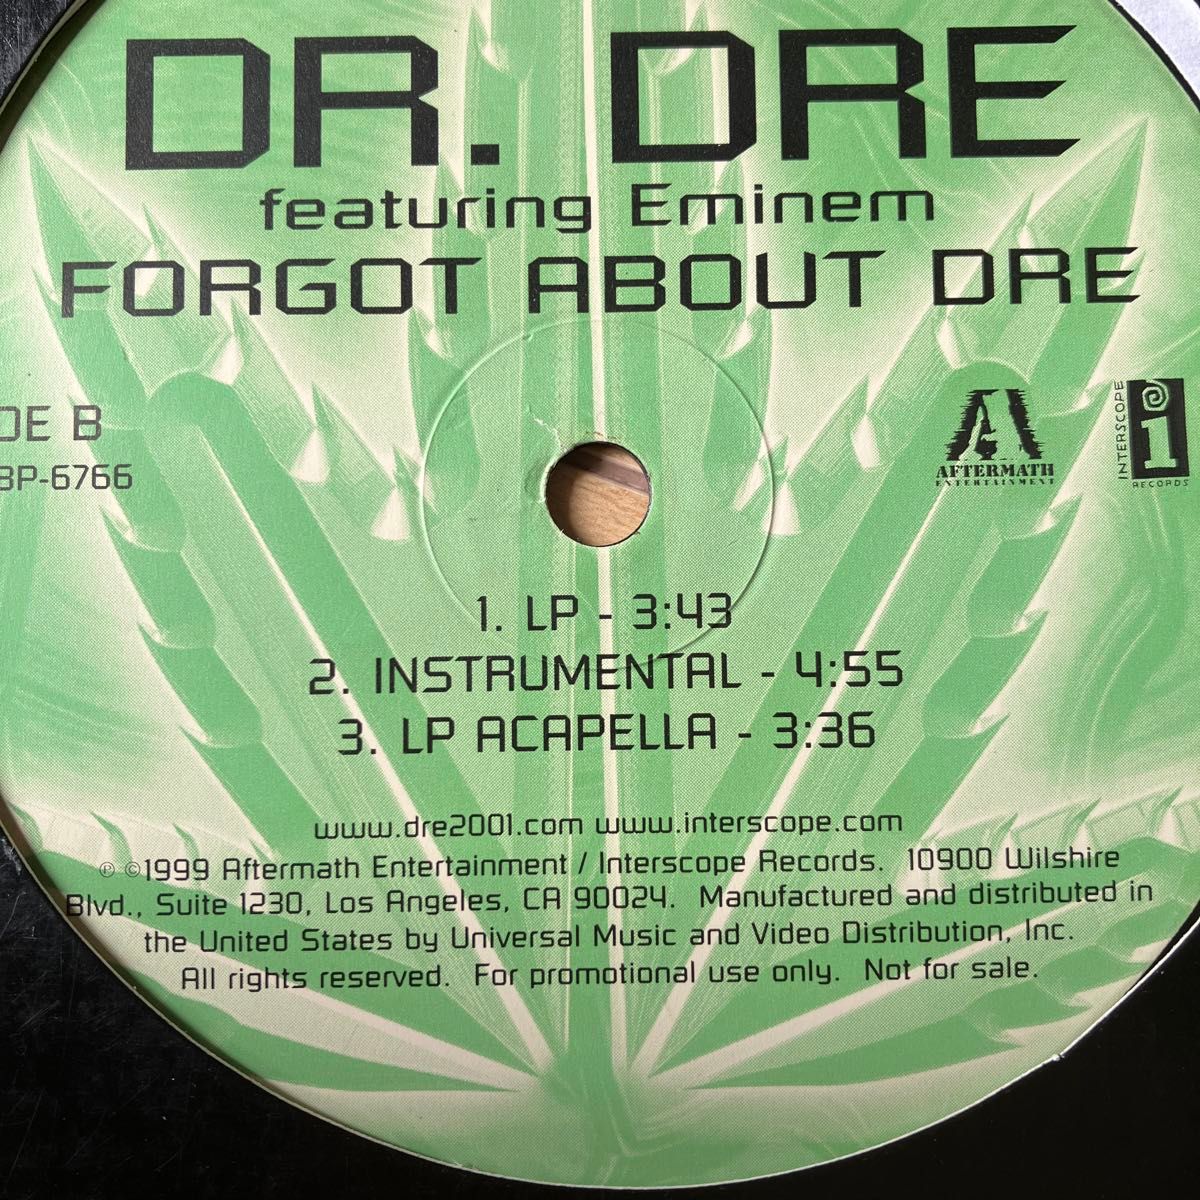 DR.DRE featuring Eminem FORGOT ABOUT DRE ドクタードレー